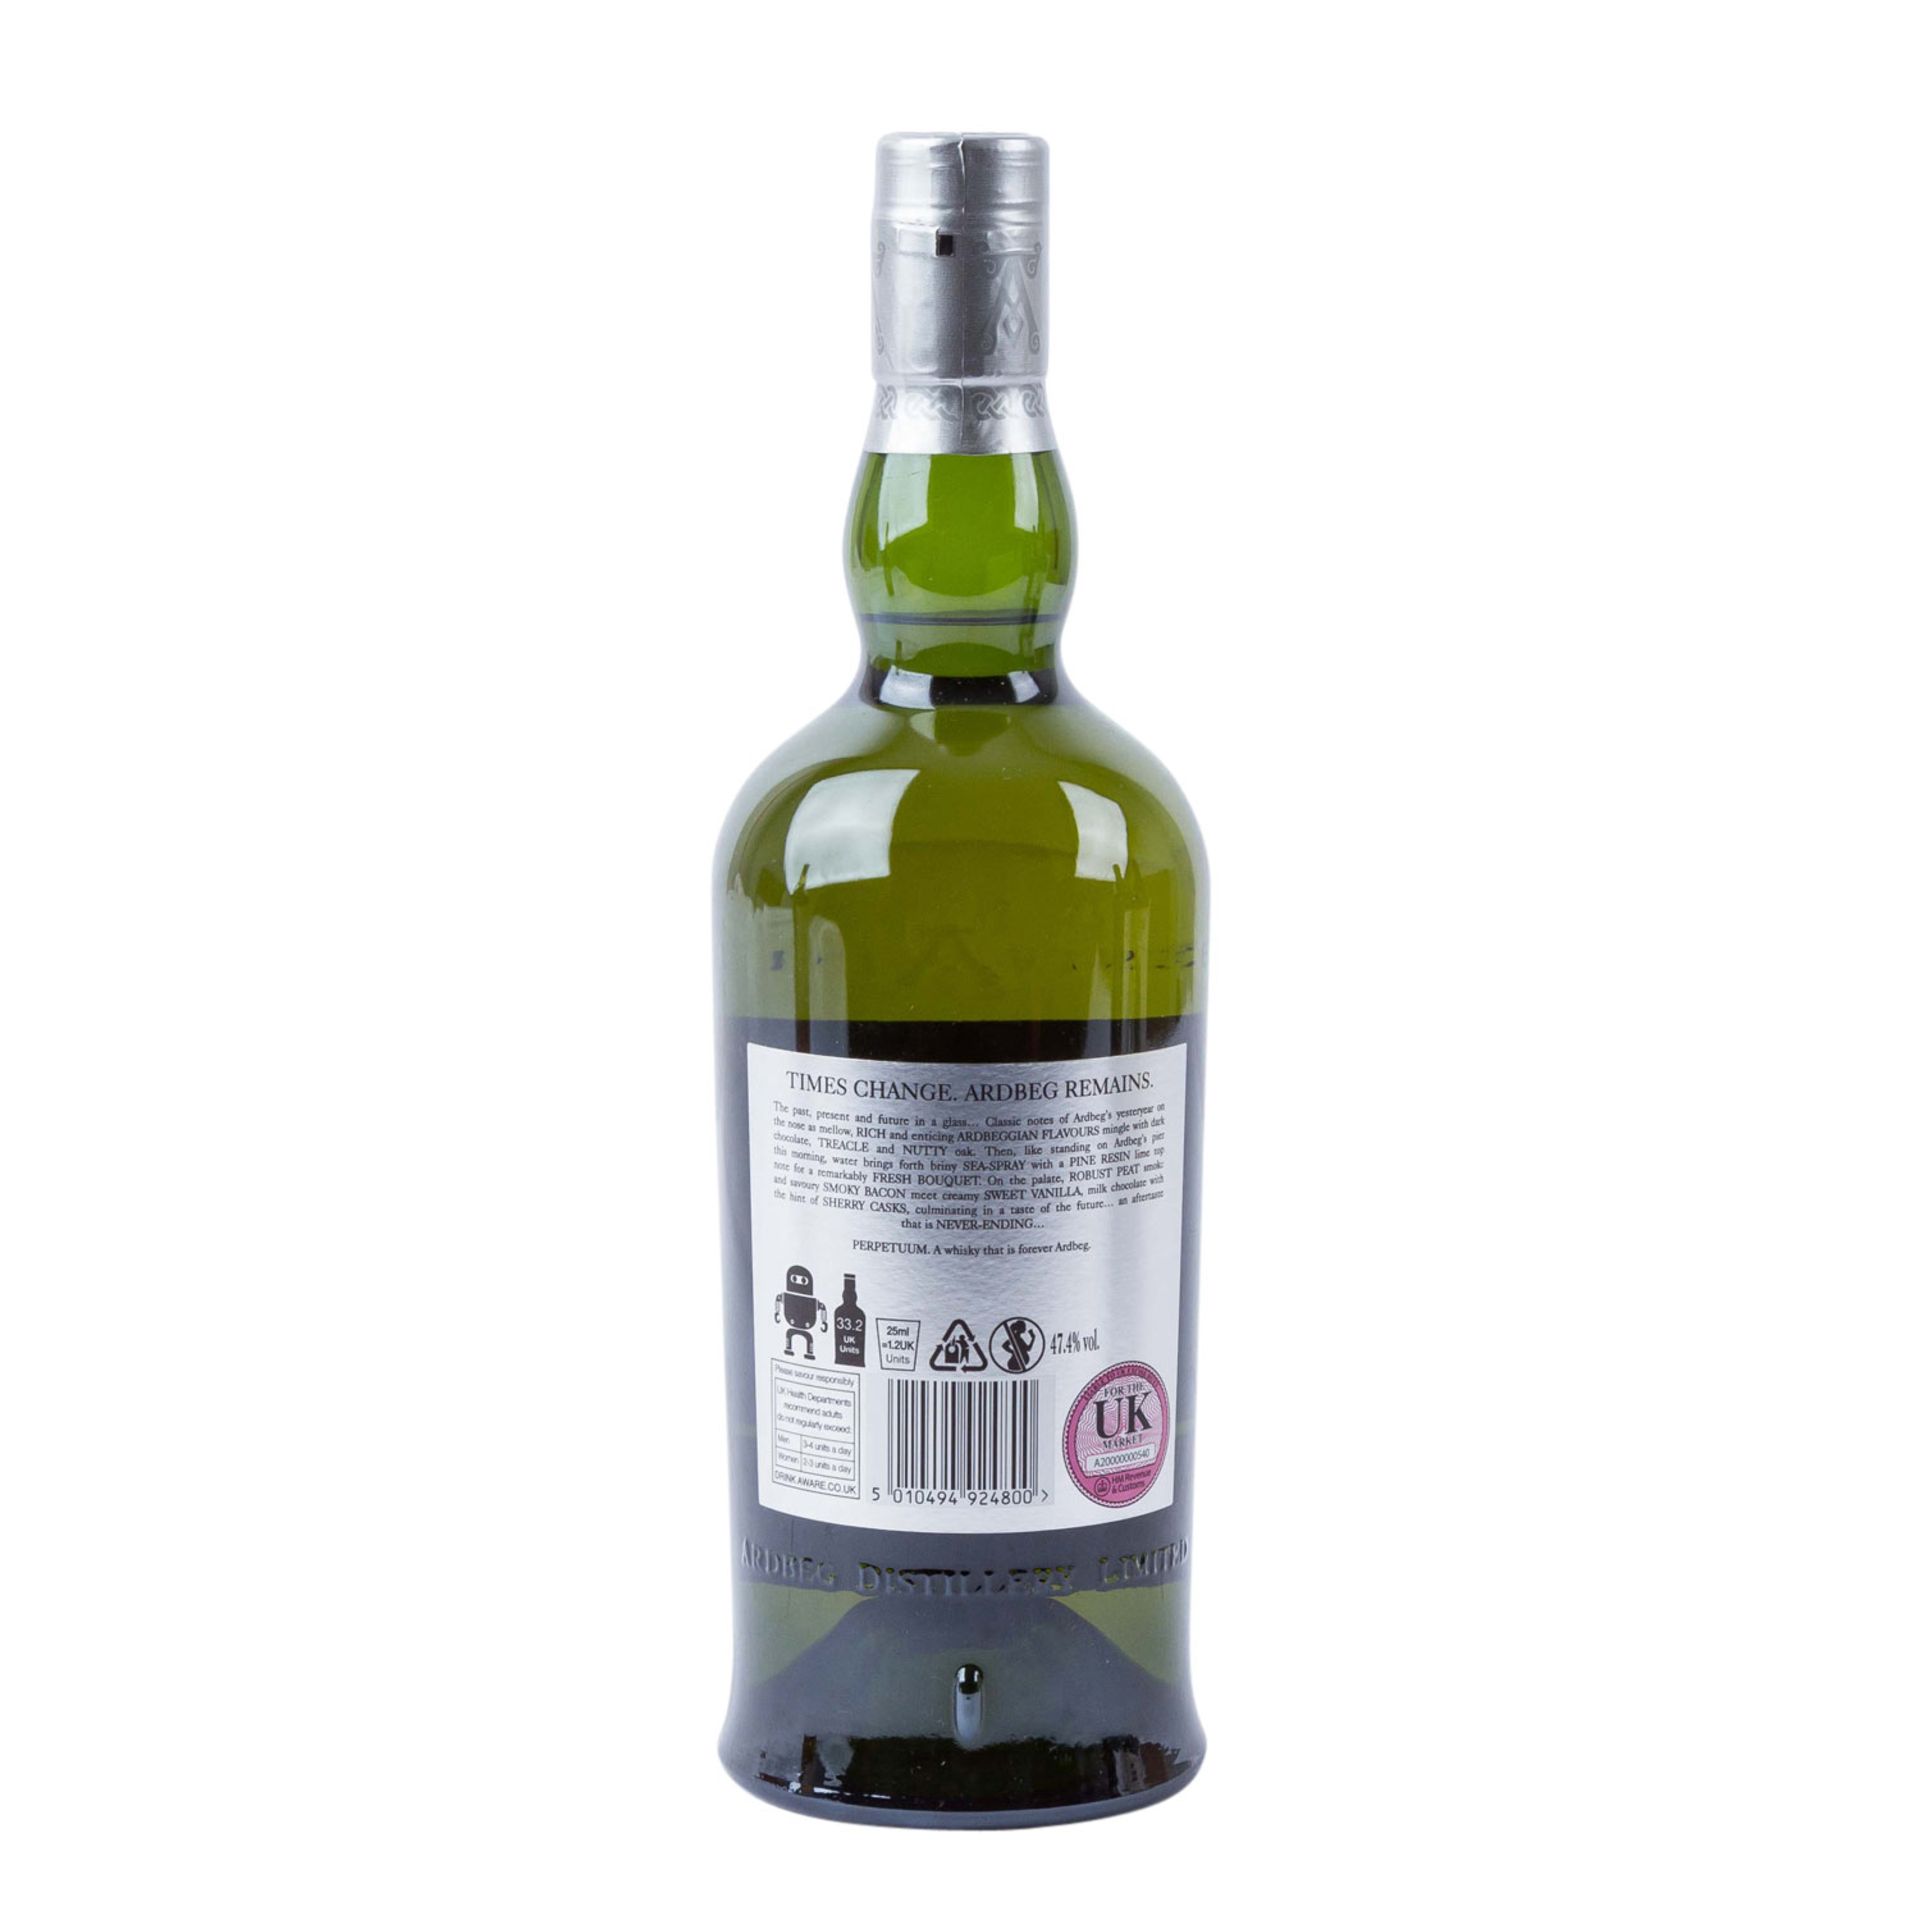 ARDBEG PERPETUUM Islay Single Malt Scotch Whisky 2015 - Image 2 of 3